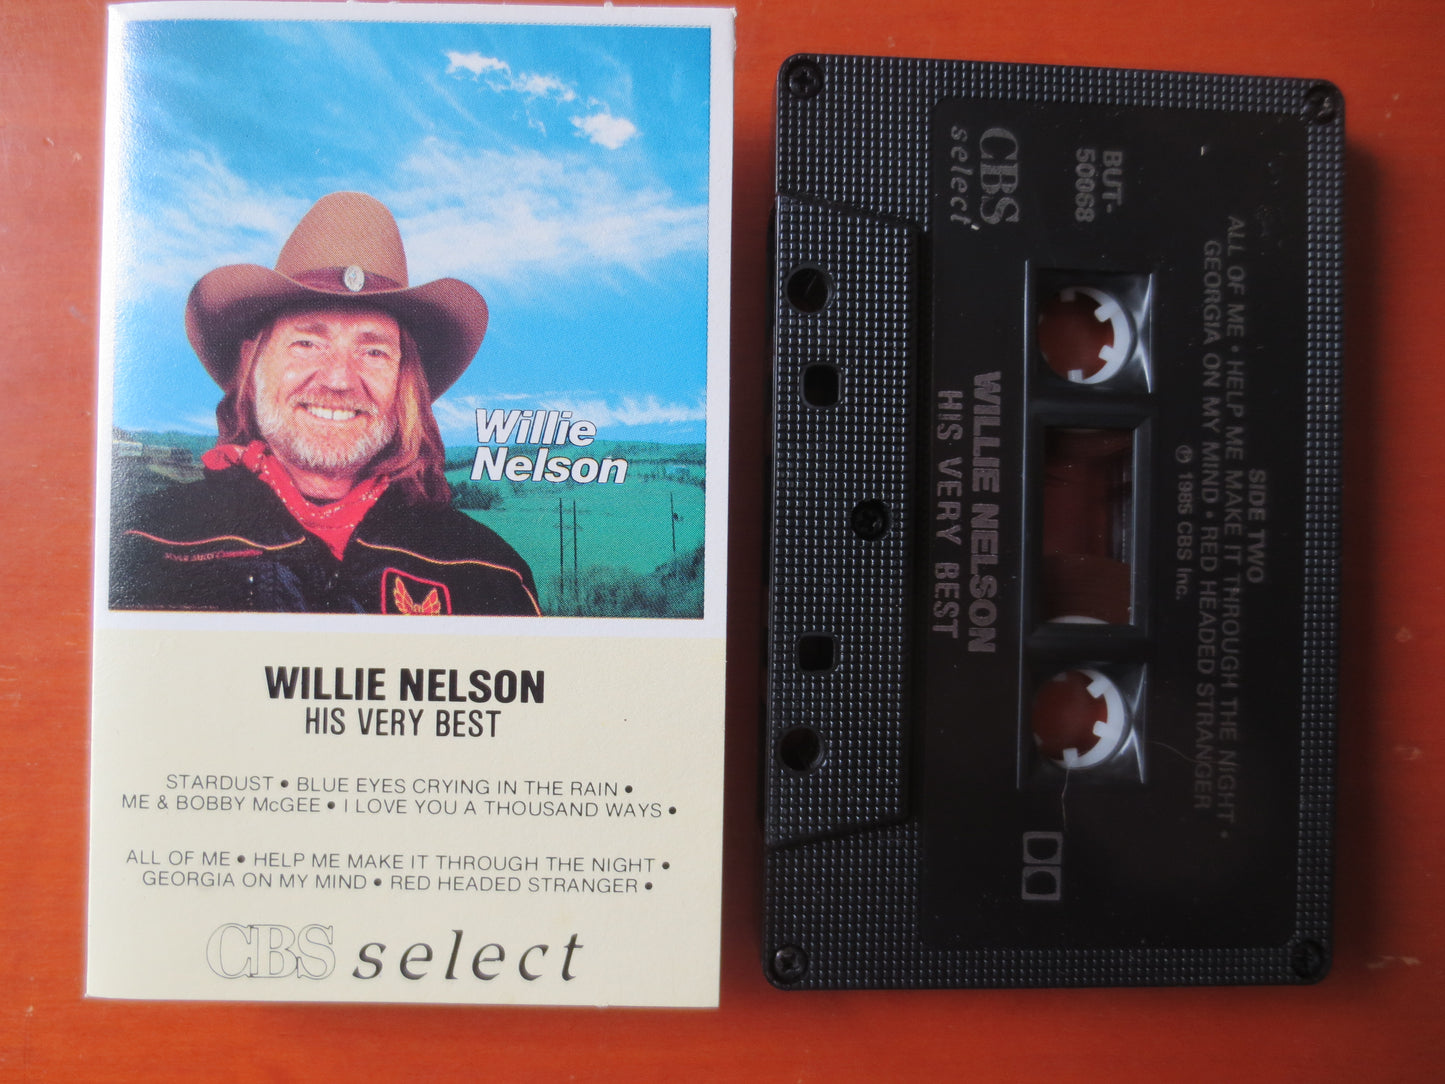 WILLIE NELSON, His Very BEST, Willie Nelson Tape, Willie Nelson Album, Tape Cassette, Tape, Country Cassette, Cassette Music